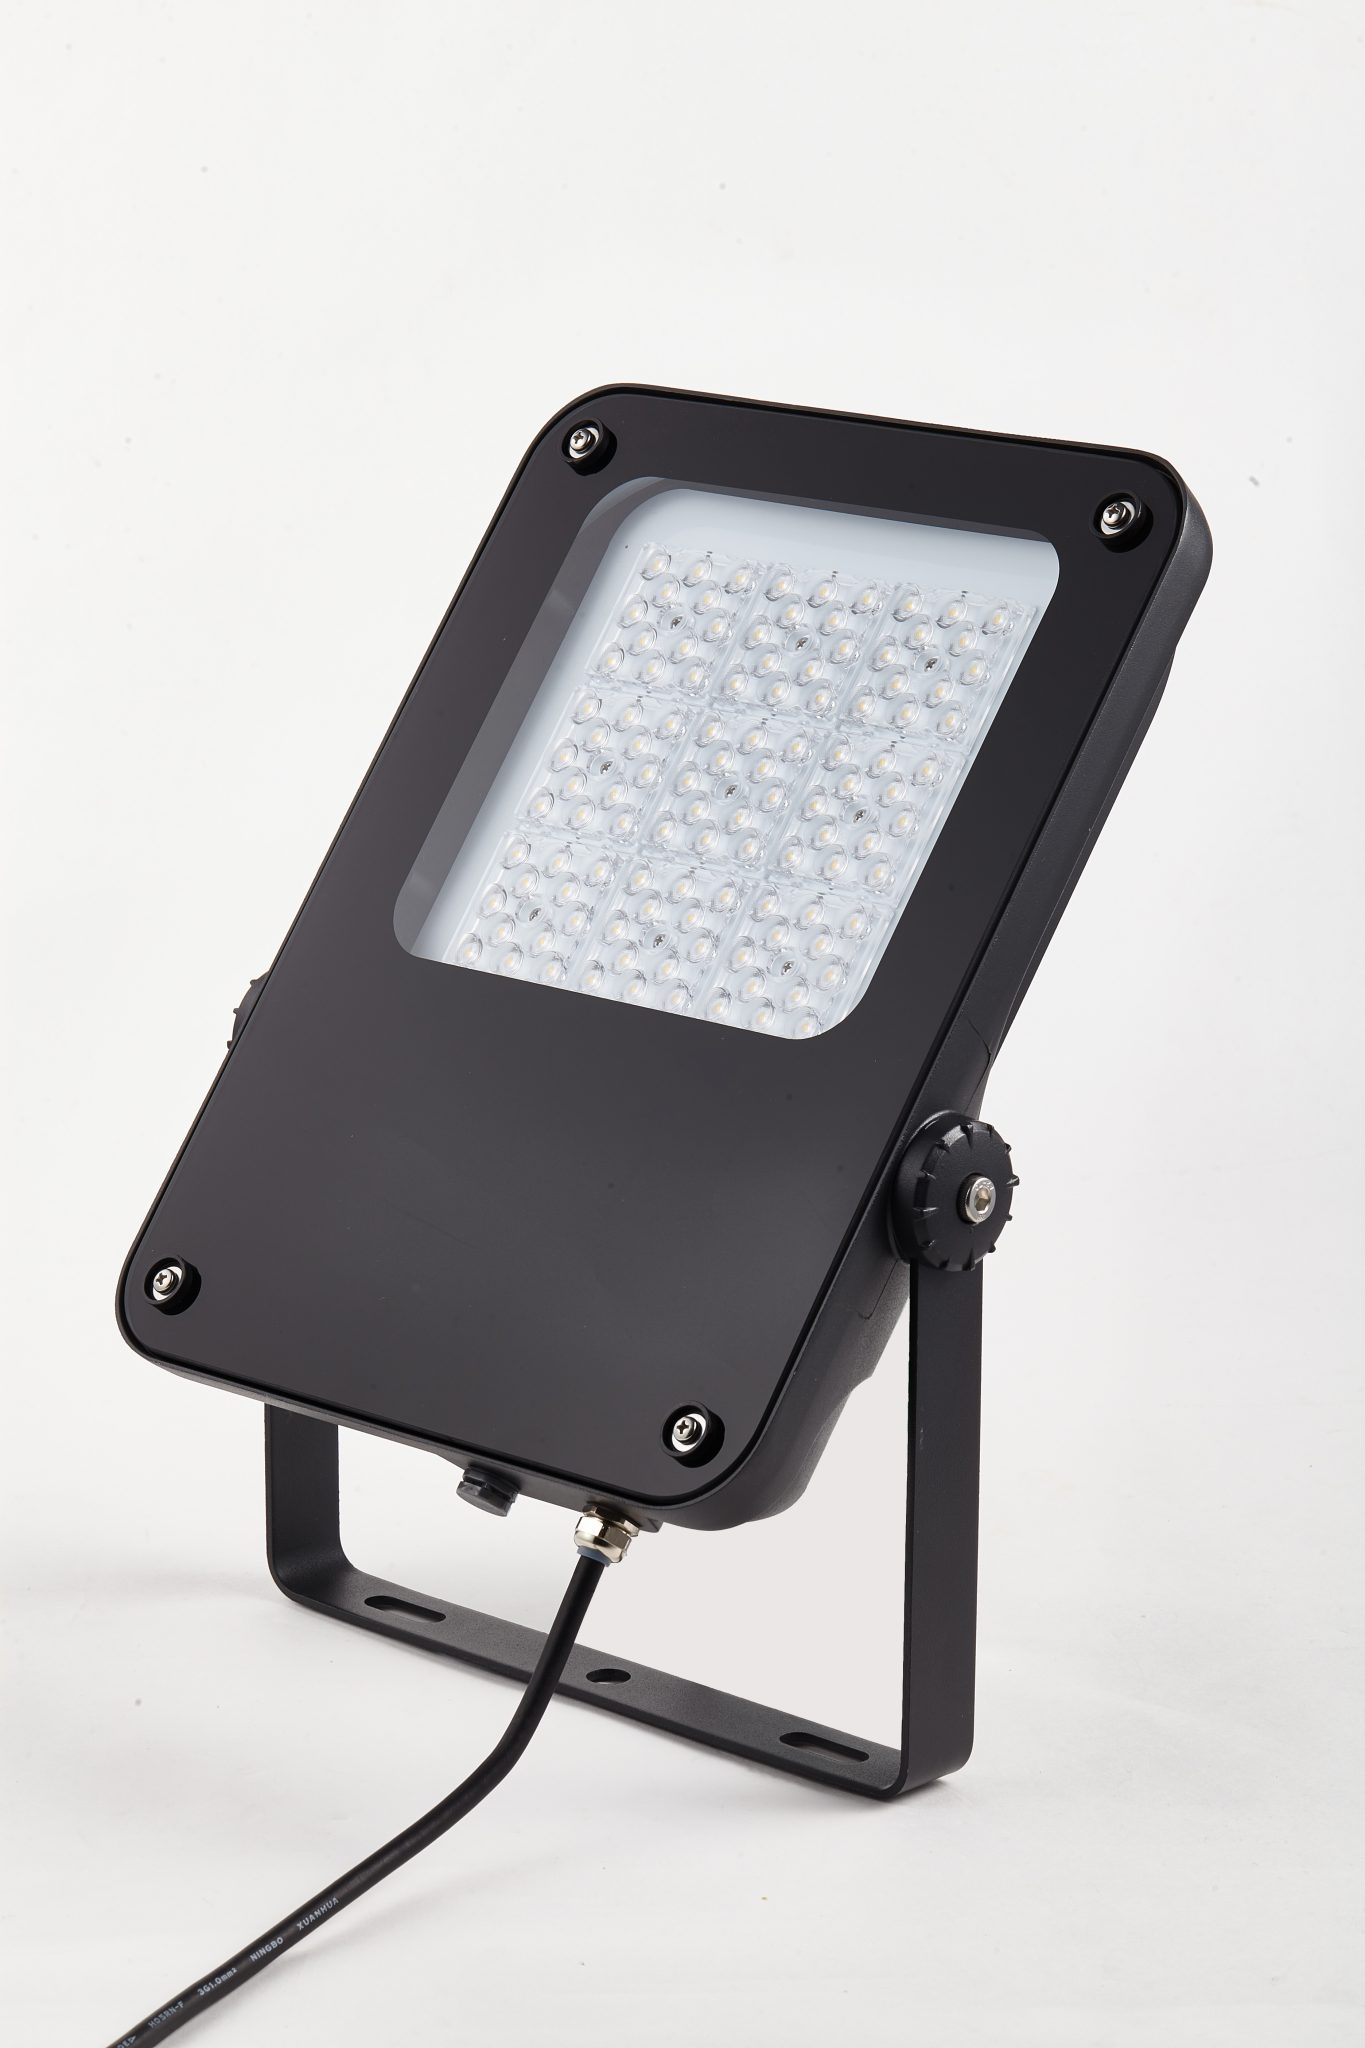 LED spotlight Atom showing the full fixture